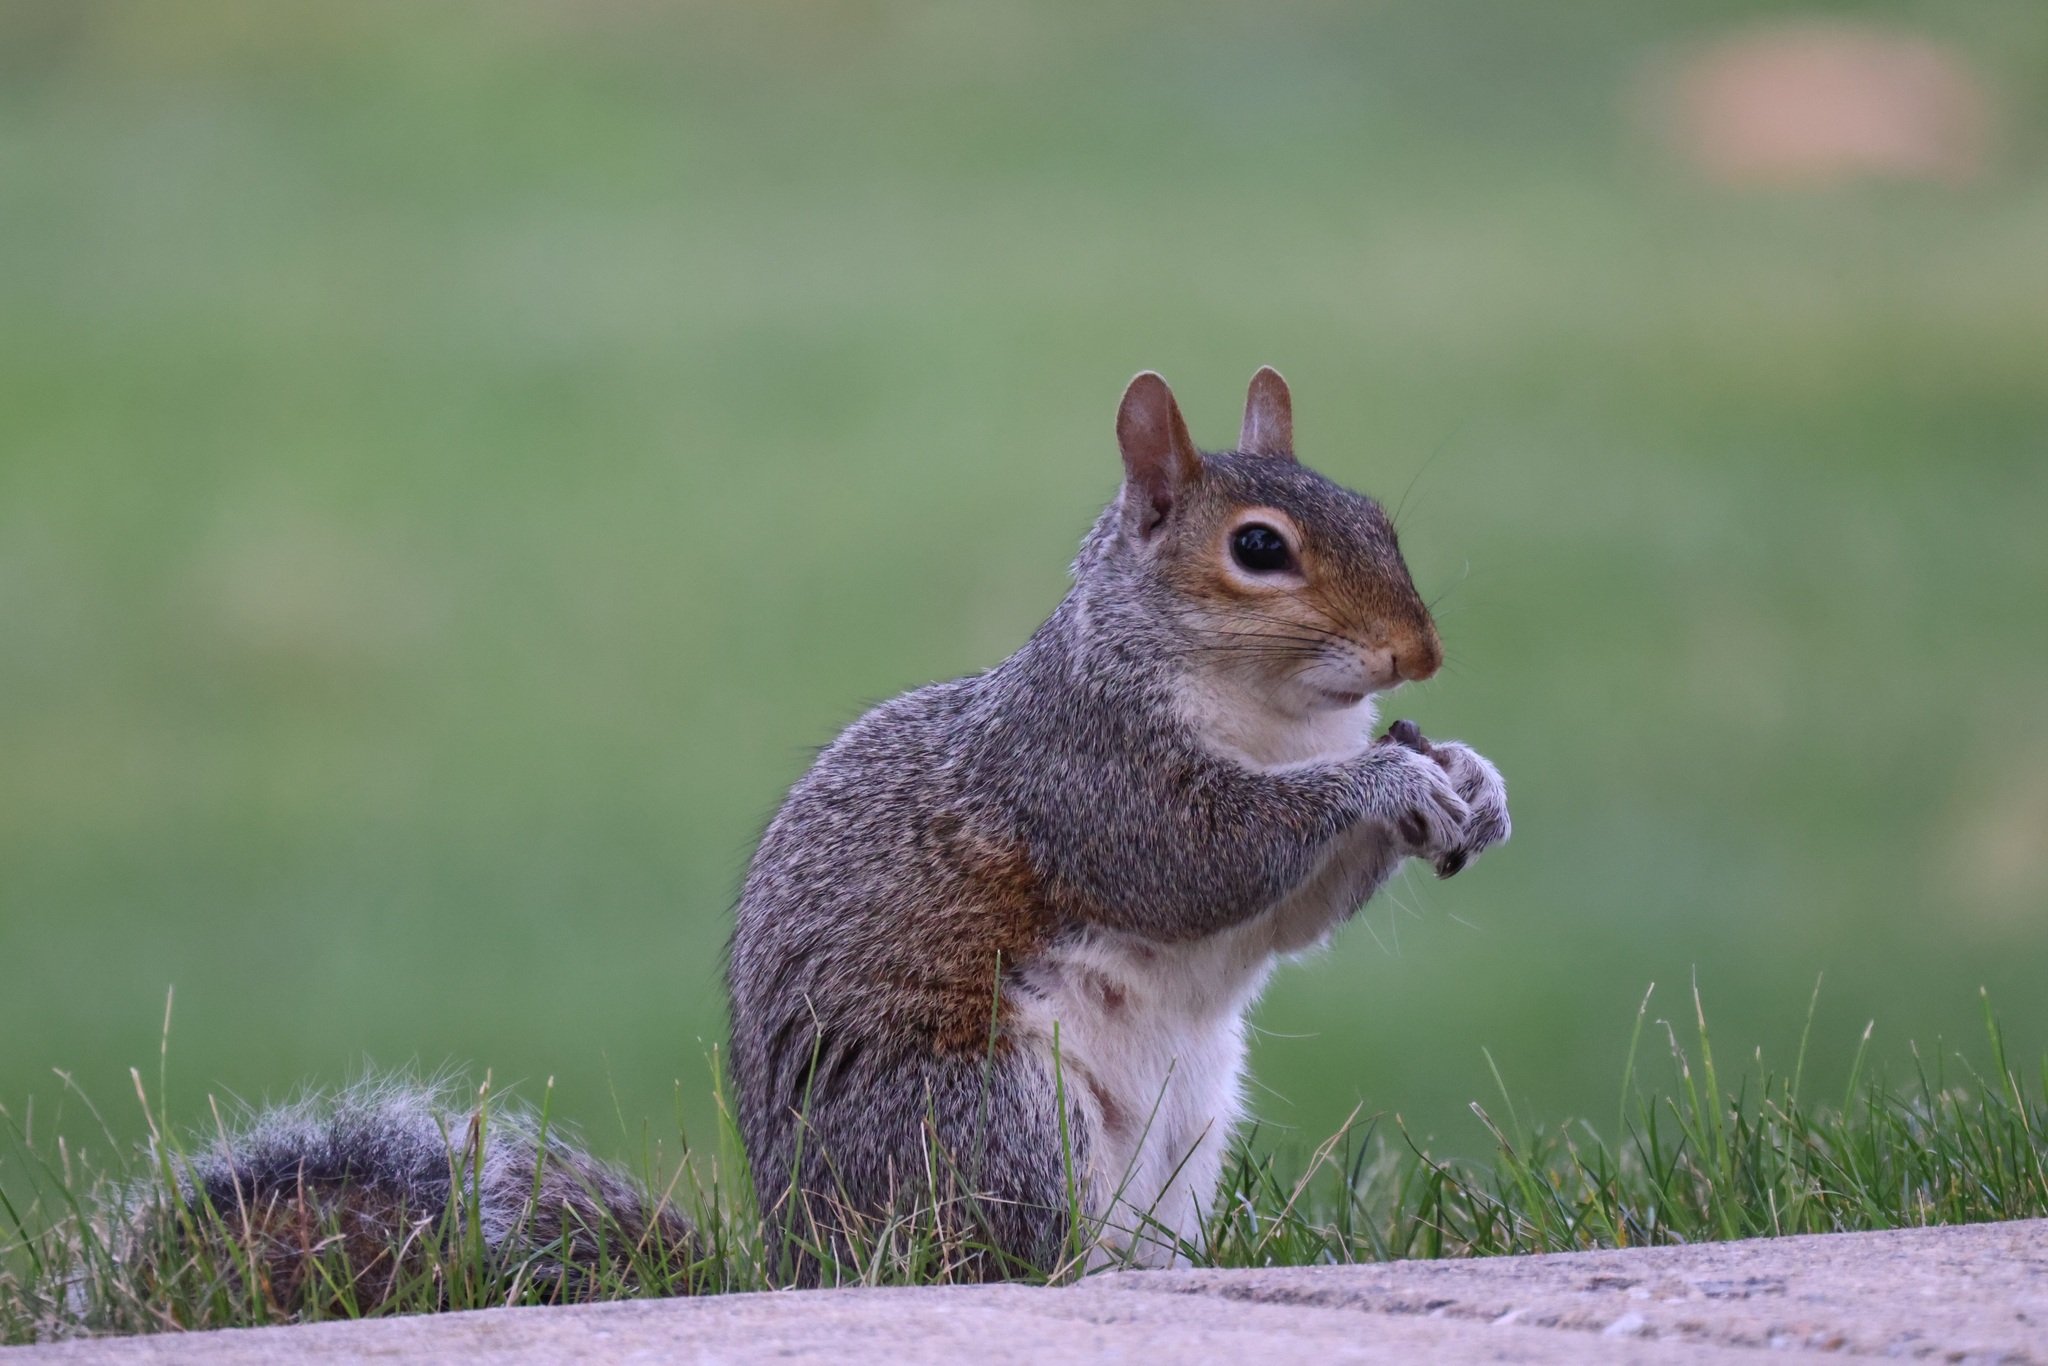 Squirrel Bait - What is the Best Bait to Catch Squirrels?